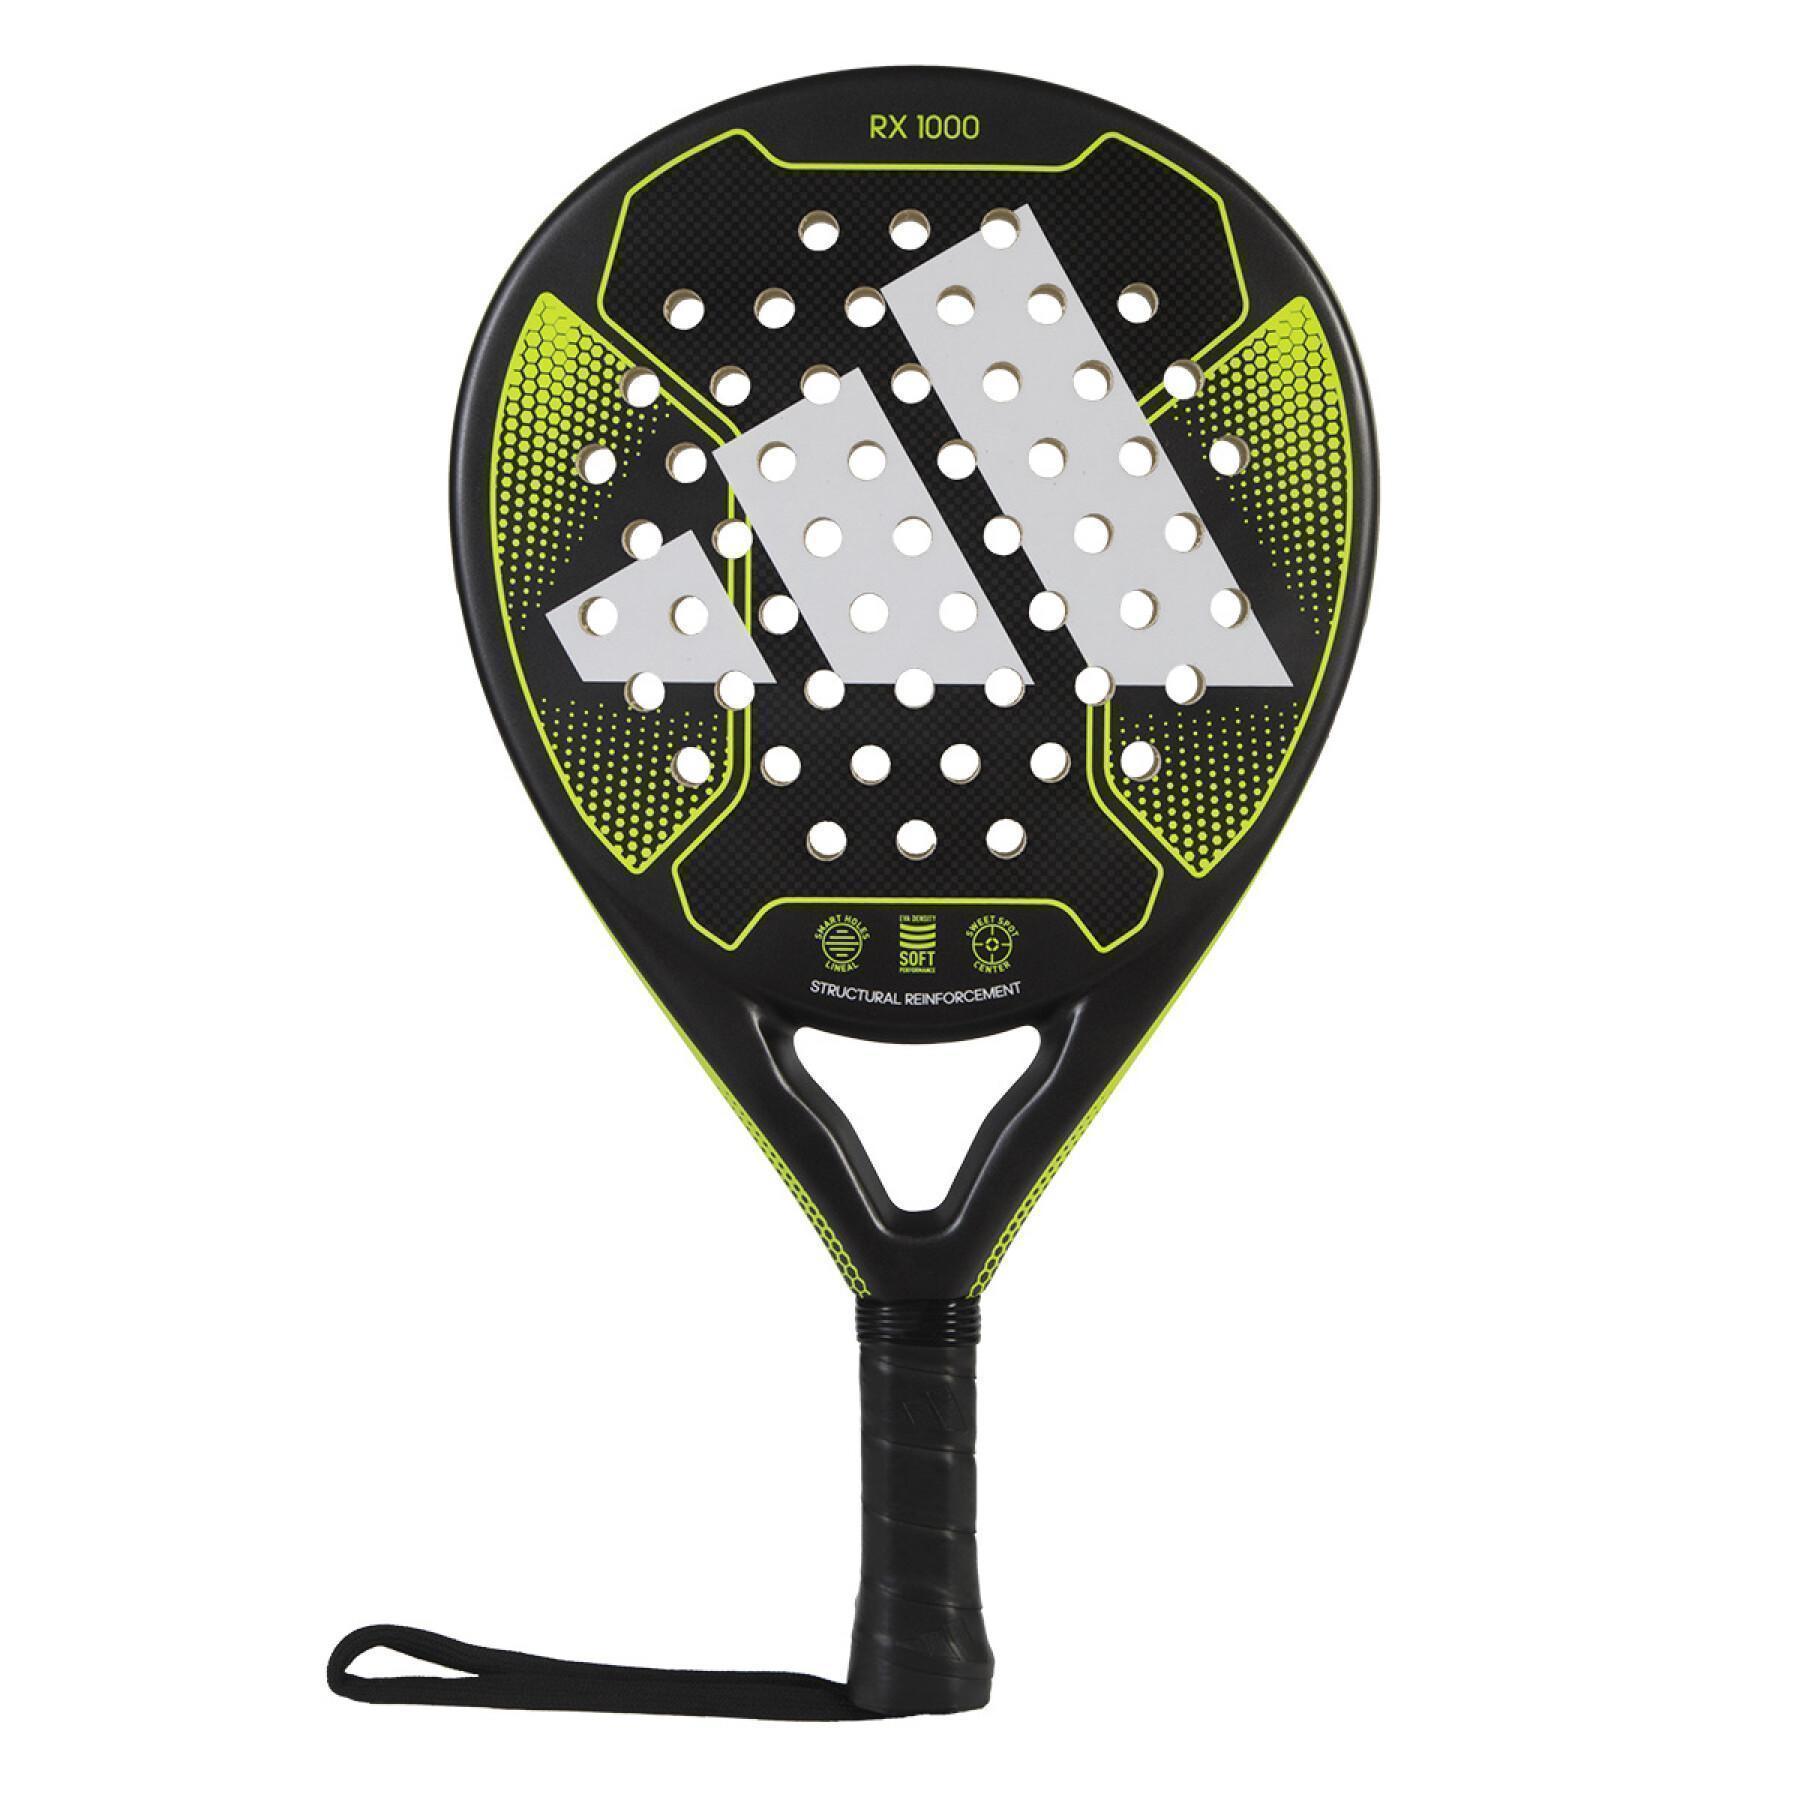 Racquet of padel adidas Adidas Rx 1000